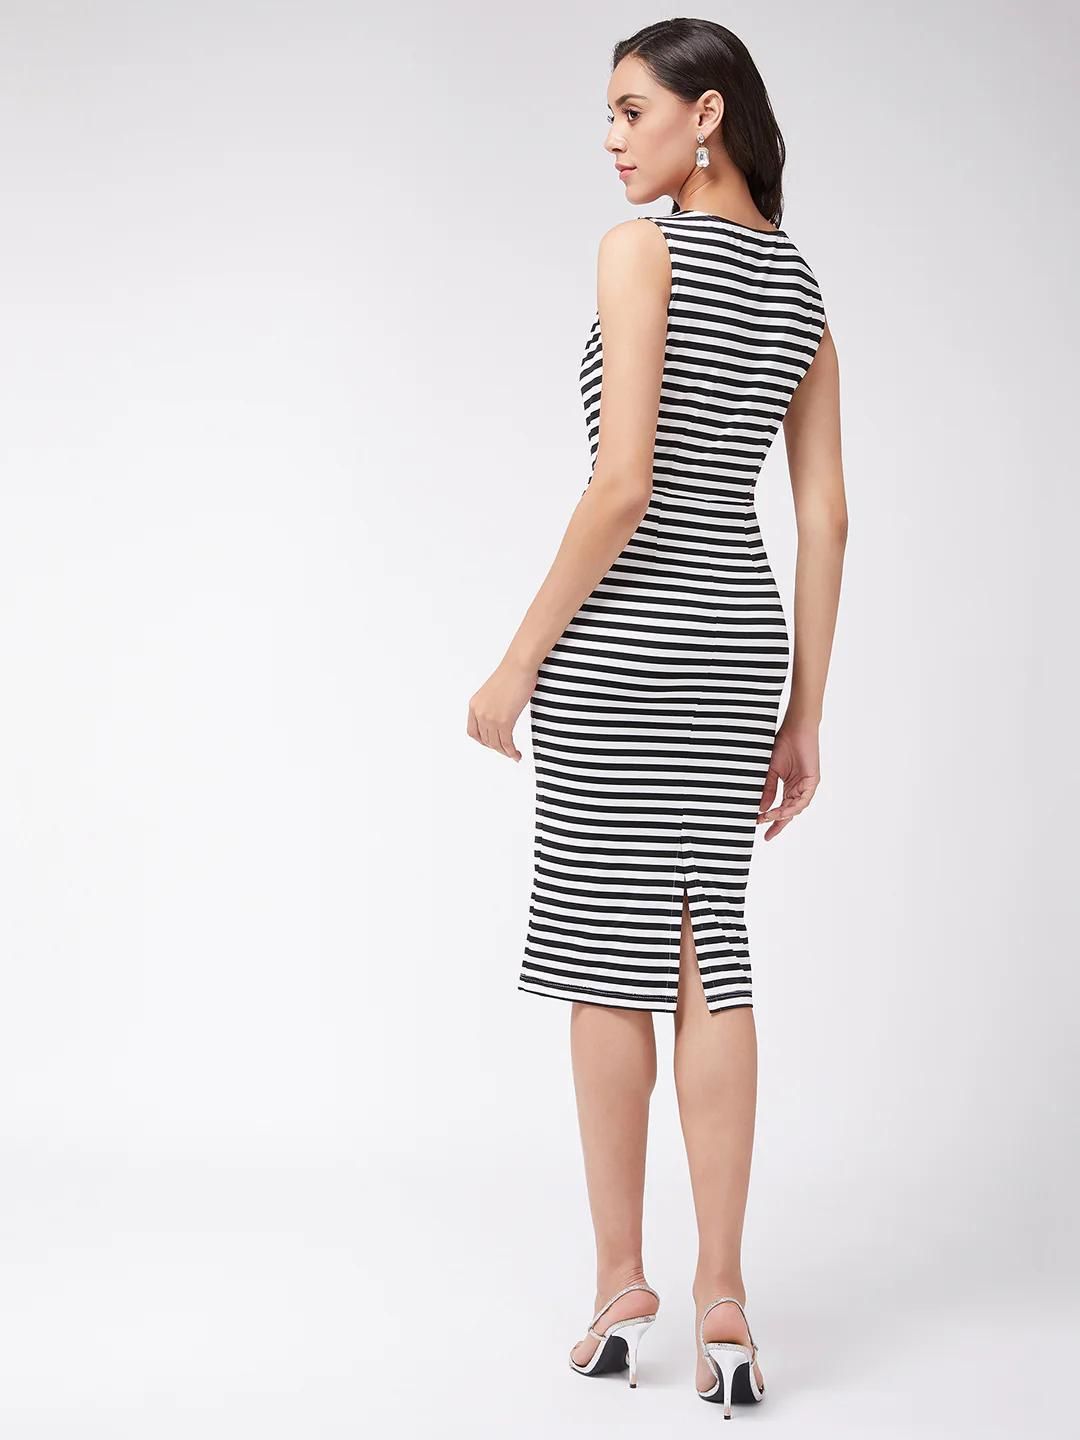 PANNKH Monocromatic Black & White Stripes Cowl Neck Dress